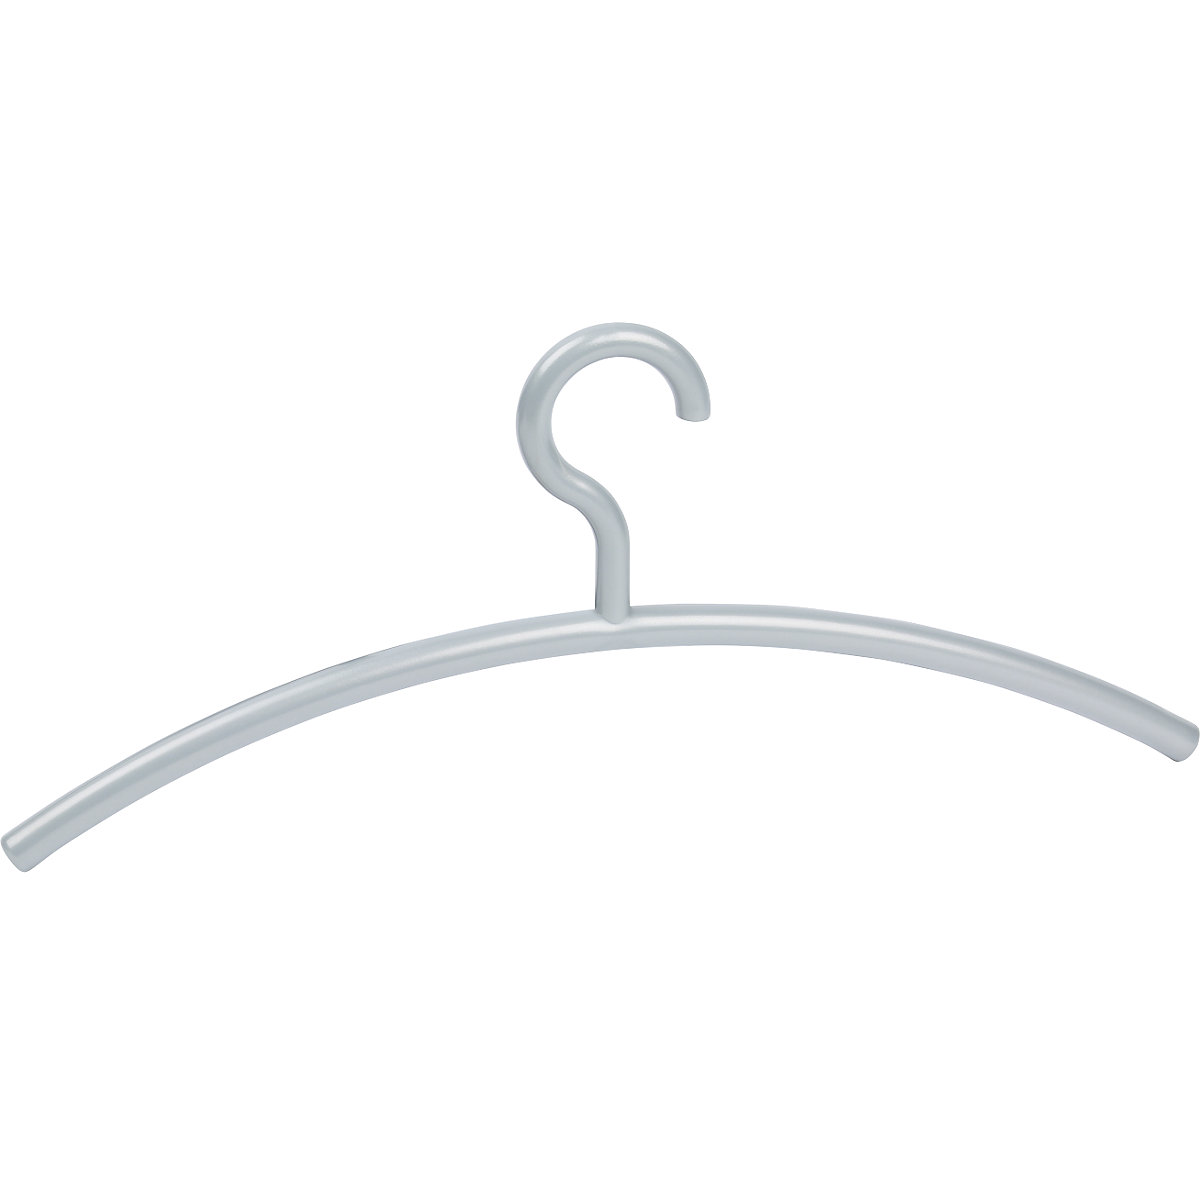 Plastic coat hanger, pack of 10, silver grey-3